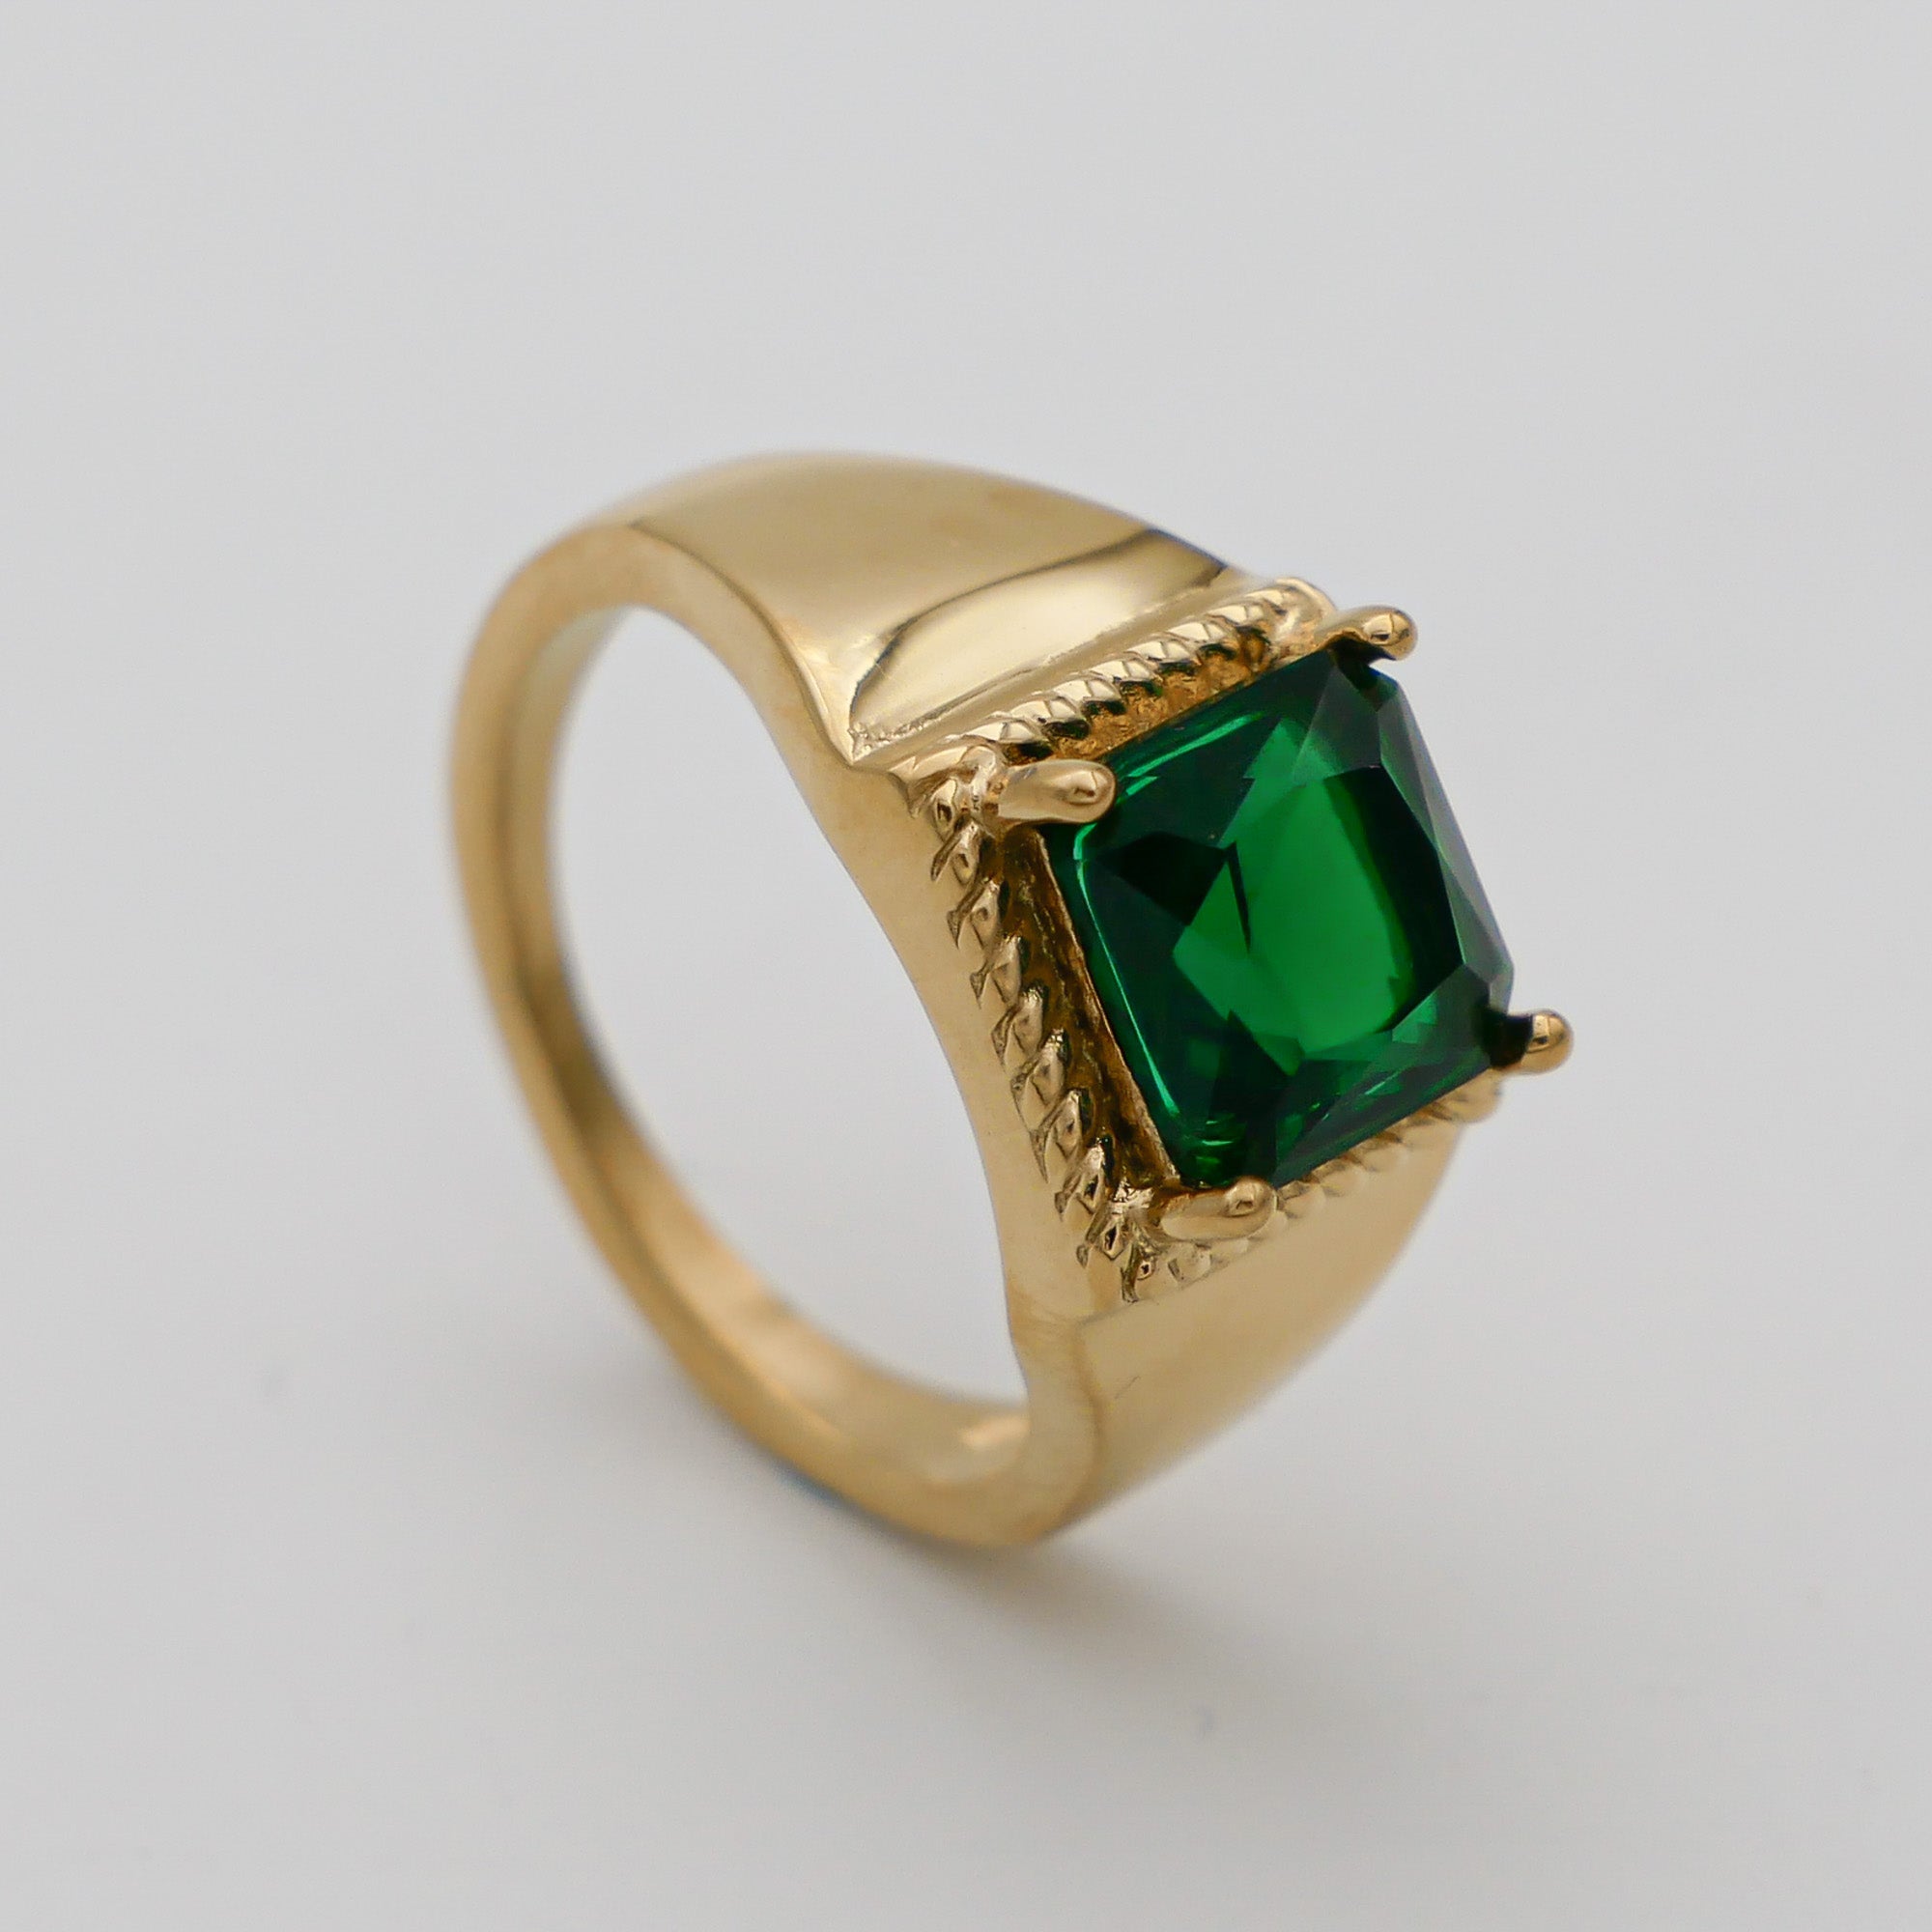 Hana Gemstone Signet Ring with emerald cubic zirconia